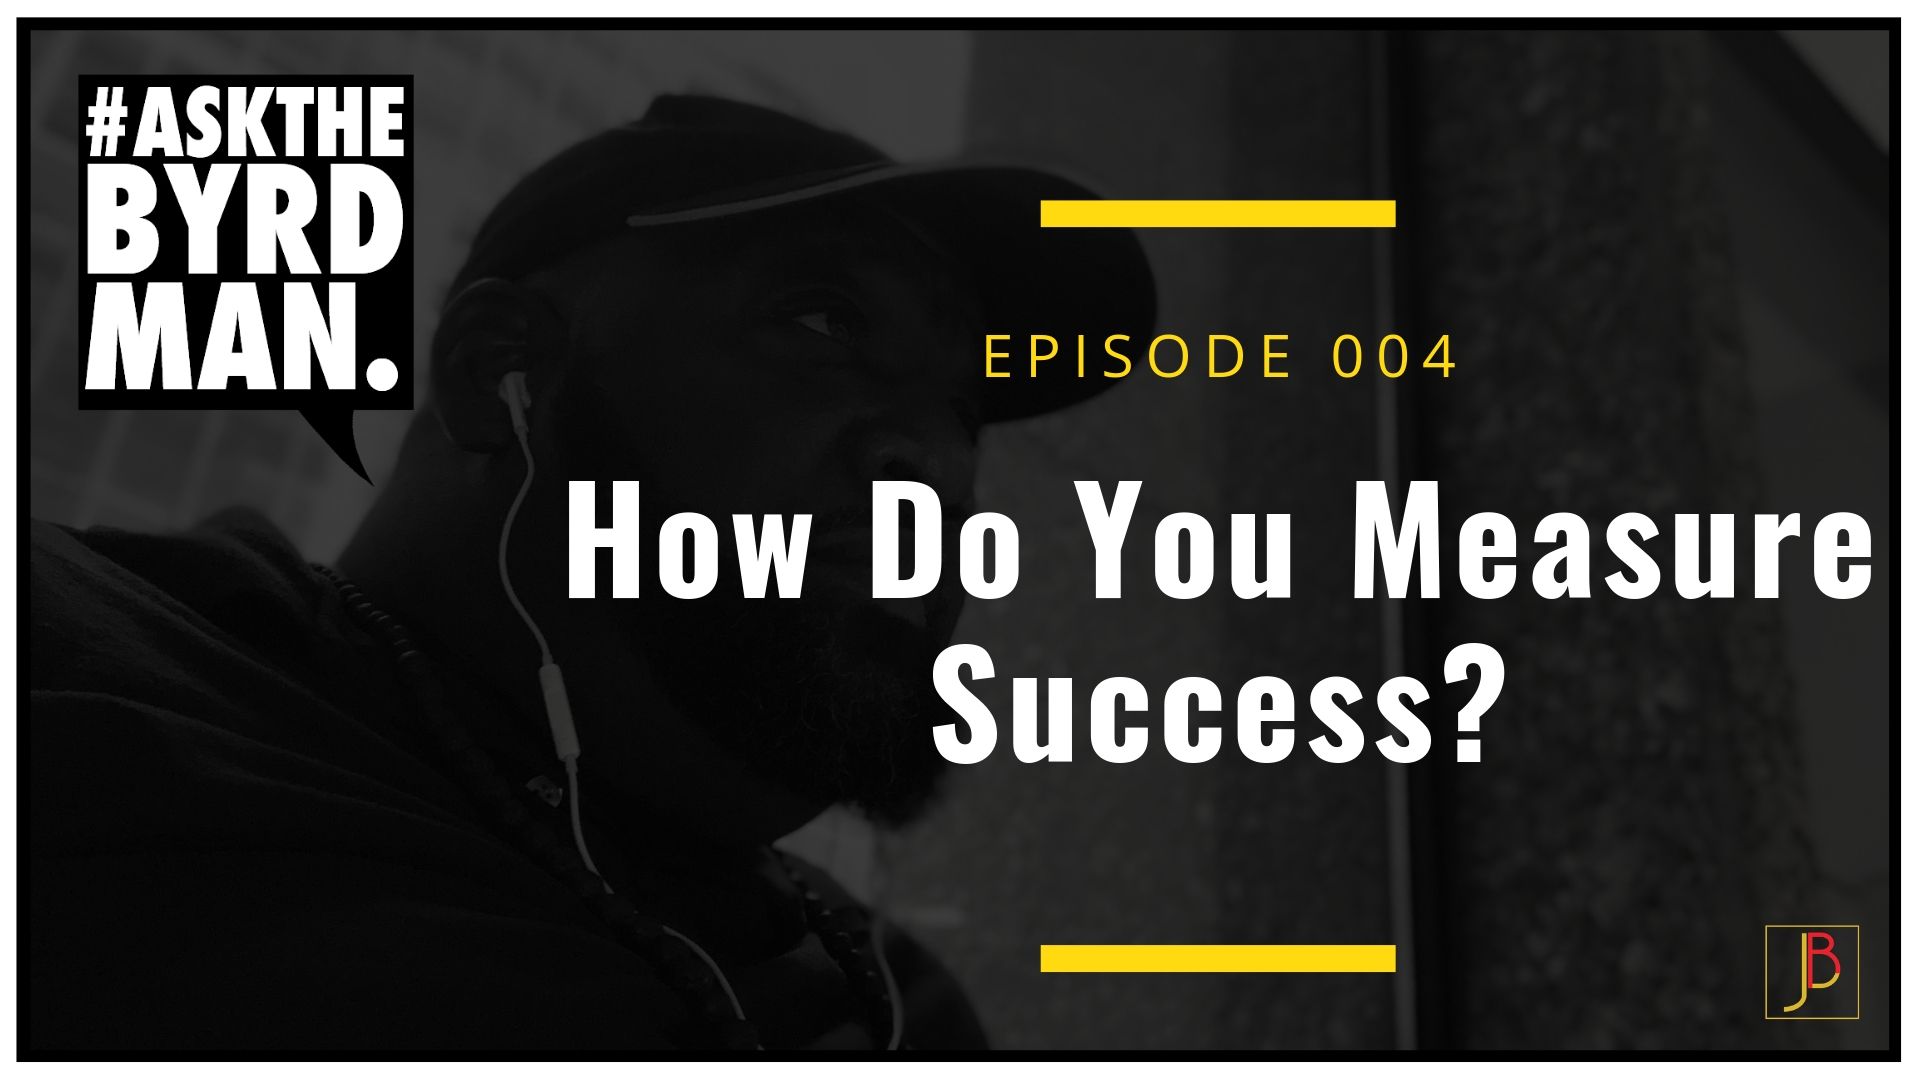 How Do I Measure Success - A Video - J. Richard Byrd